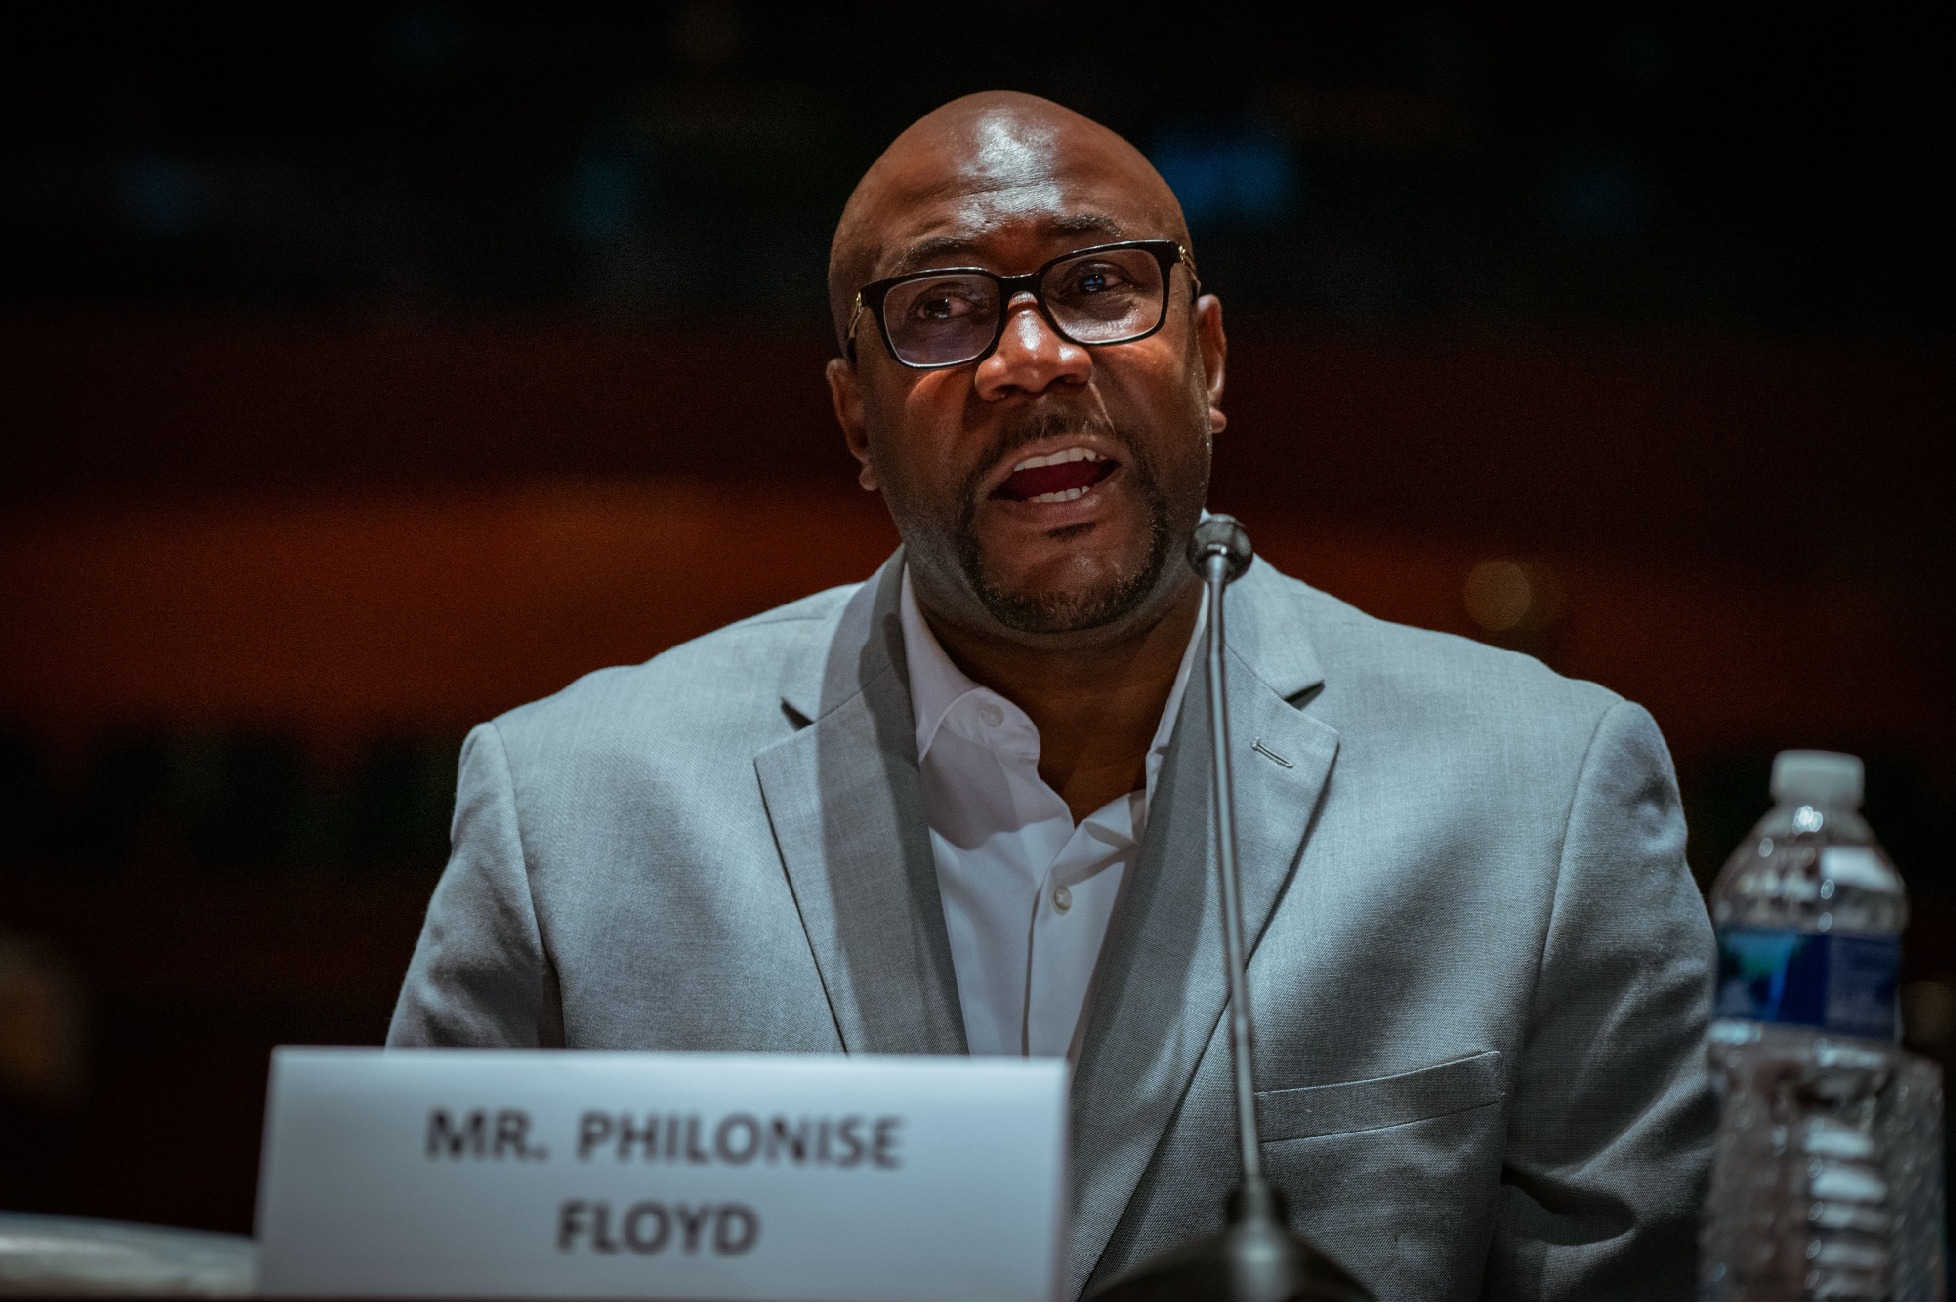 Philonise Floyd says twent dollars caused his brother death